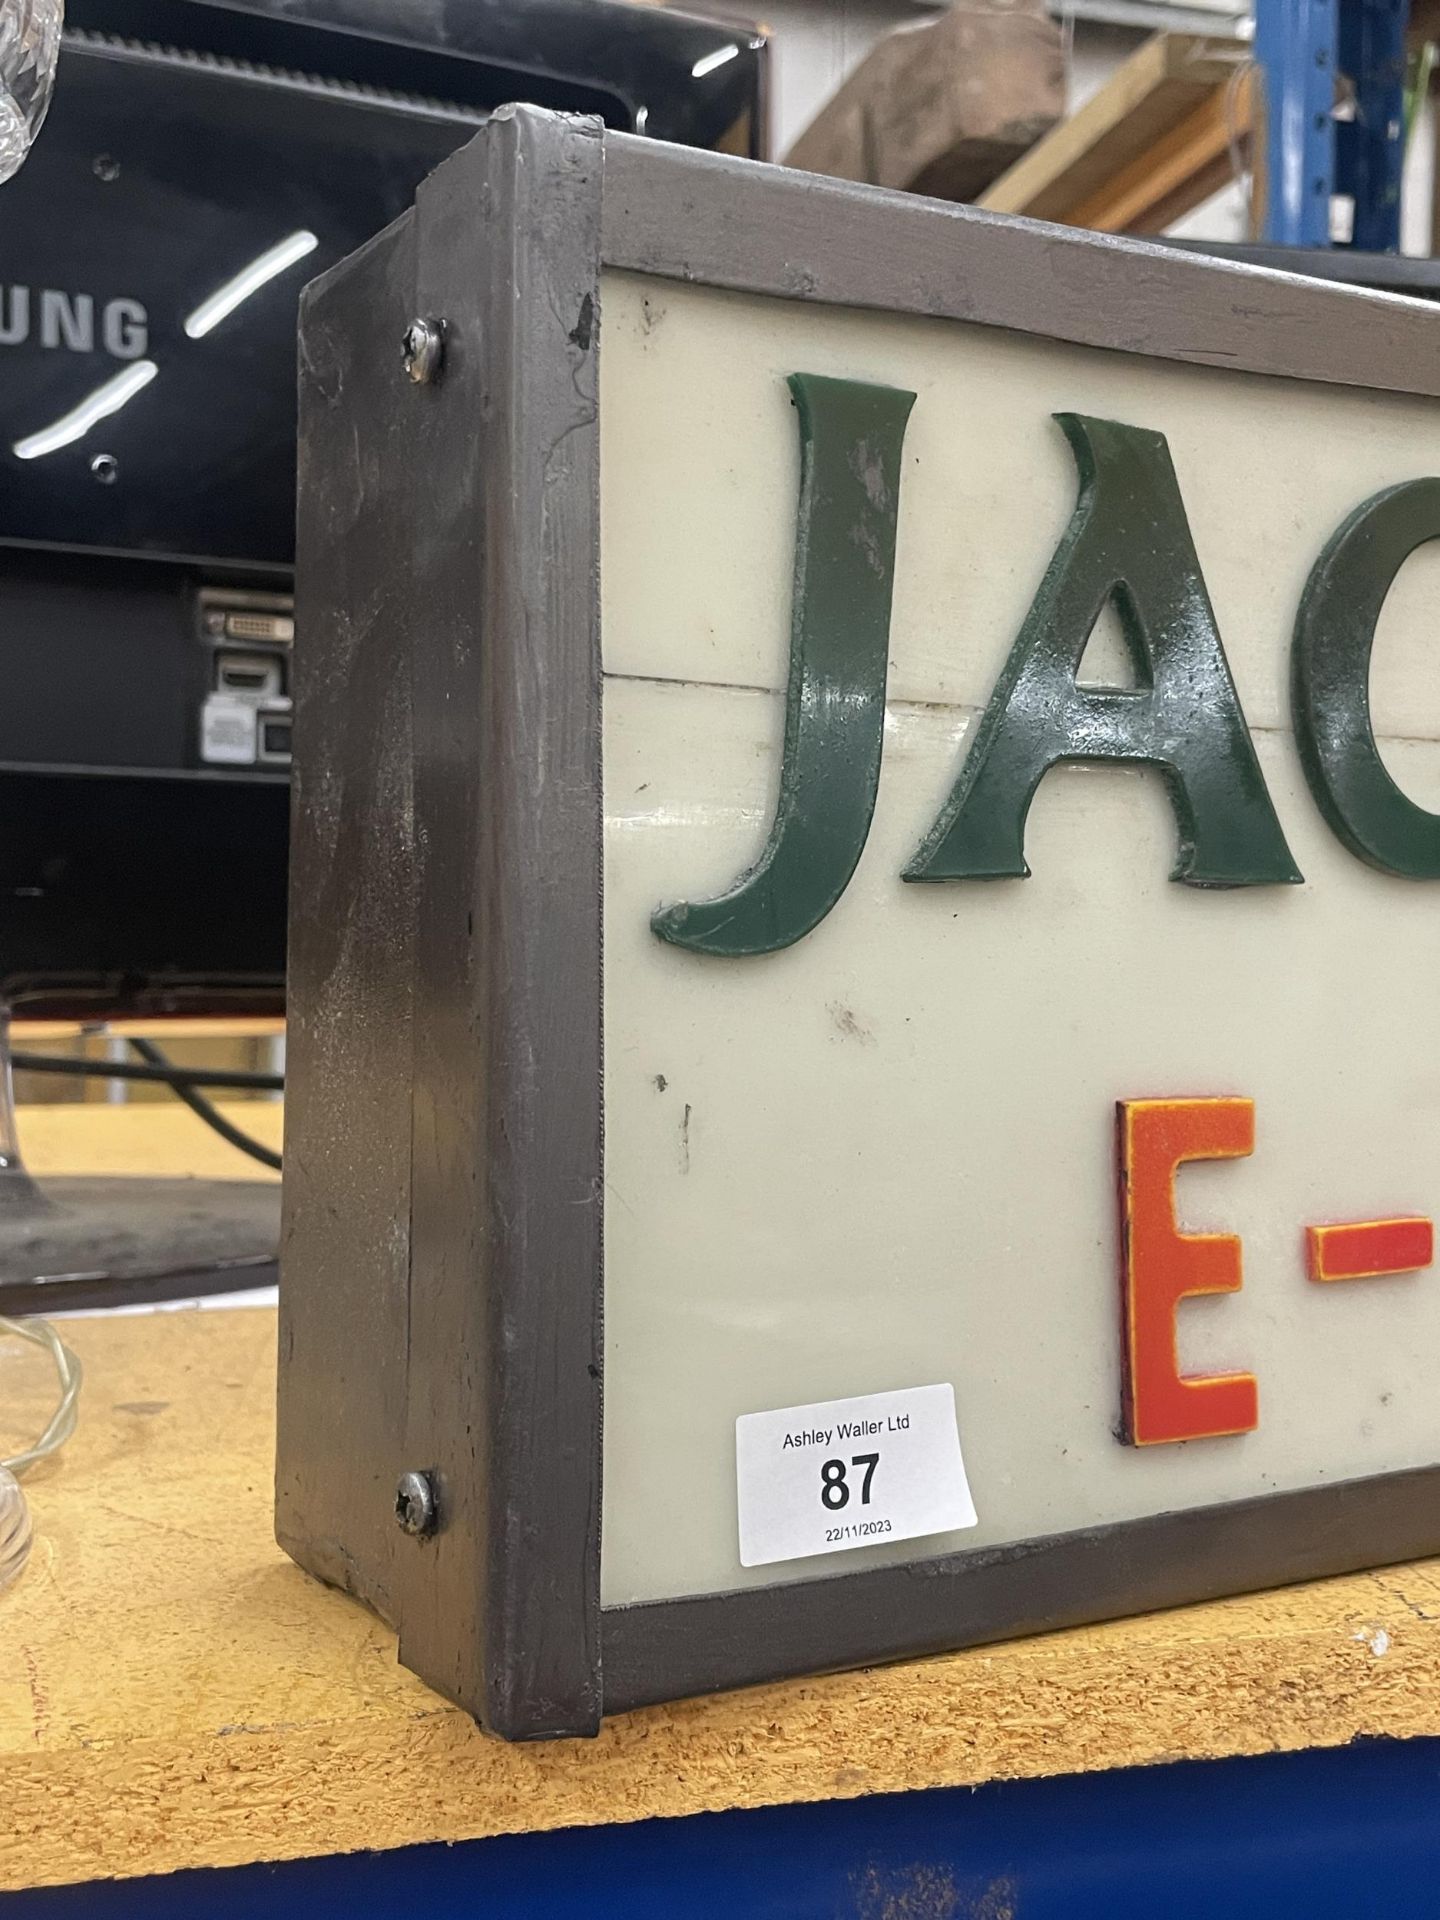 A JAGUAR E-TYPE ILLUMINATED BOX SIGN - Image 2 of 2